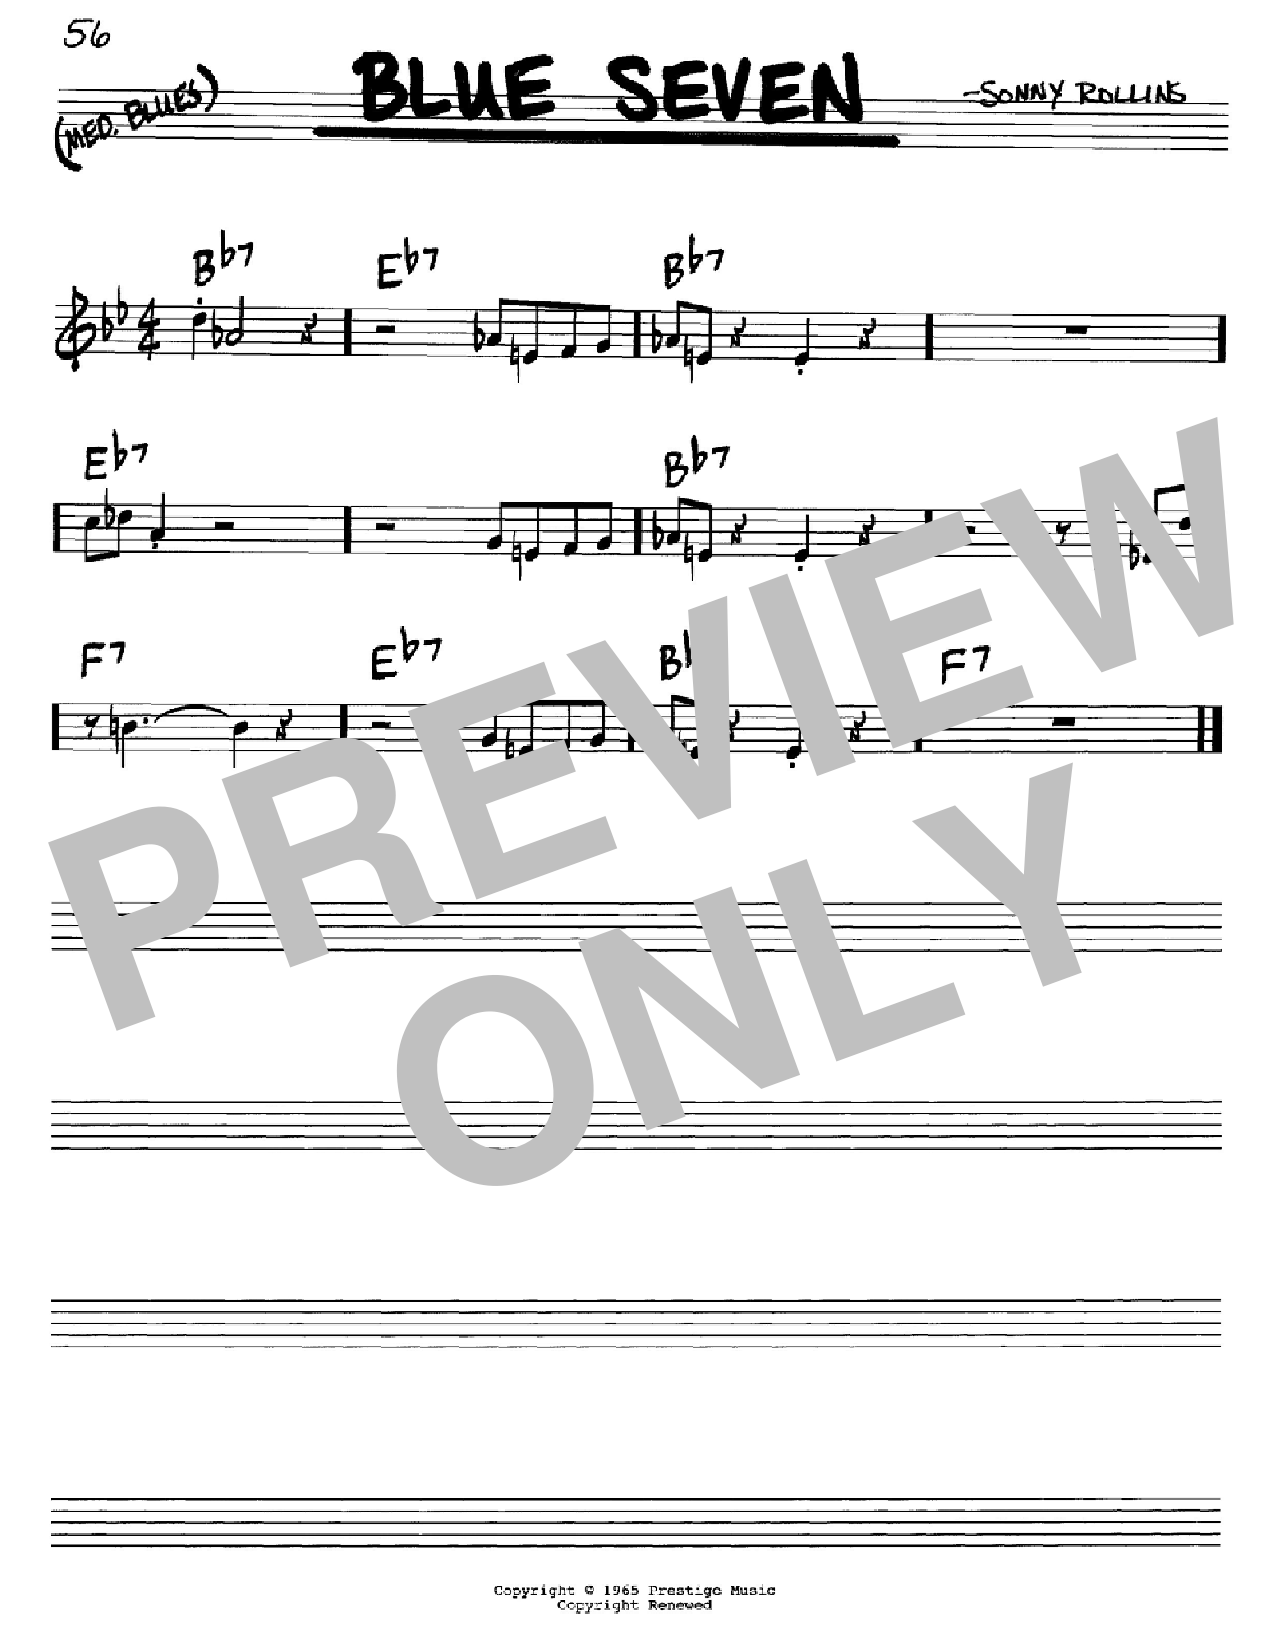 Sonny Rollins Blue Seven Sheet Music Notes & Chords for Tenor Sax Transcription - Download or Print PDF